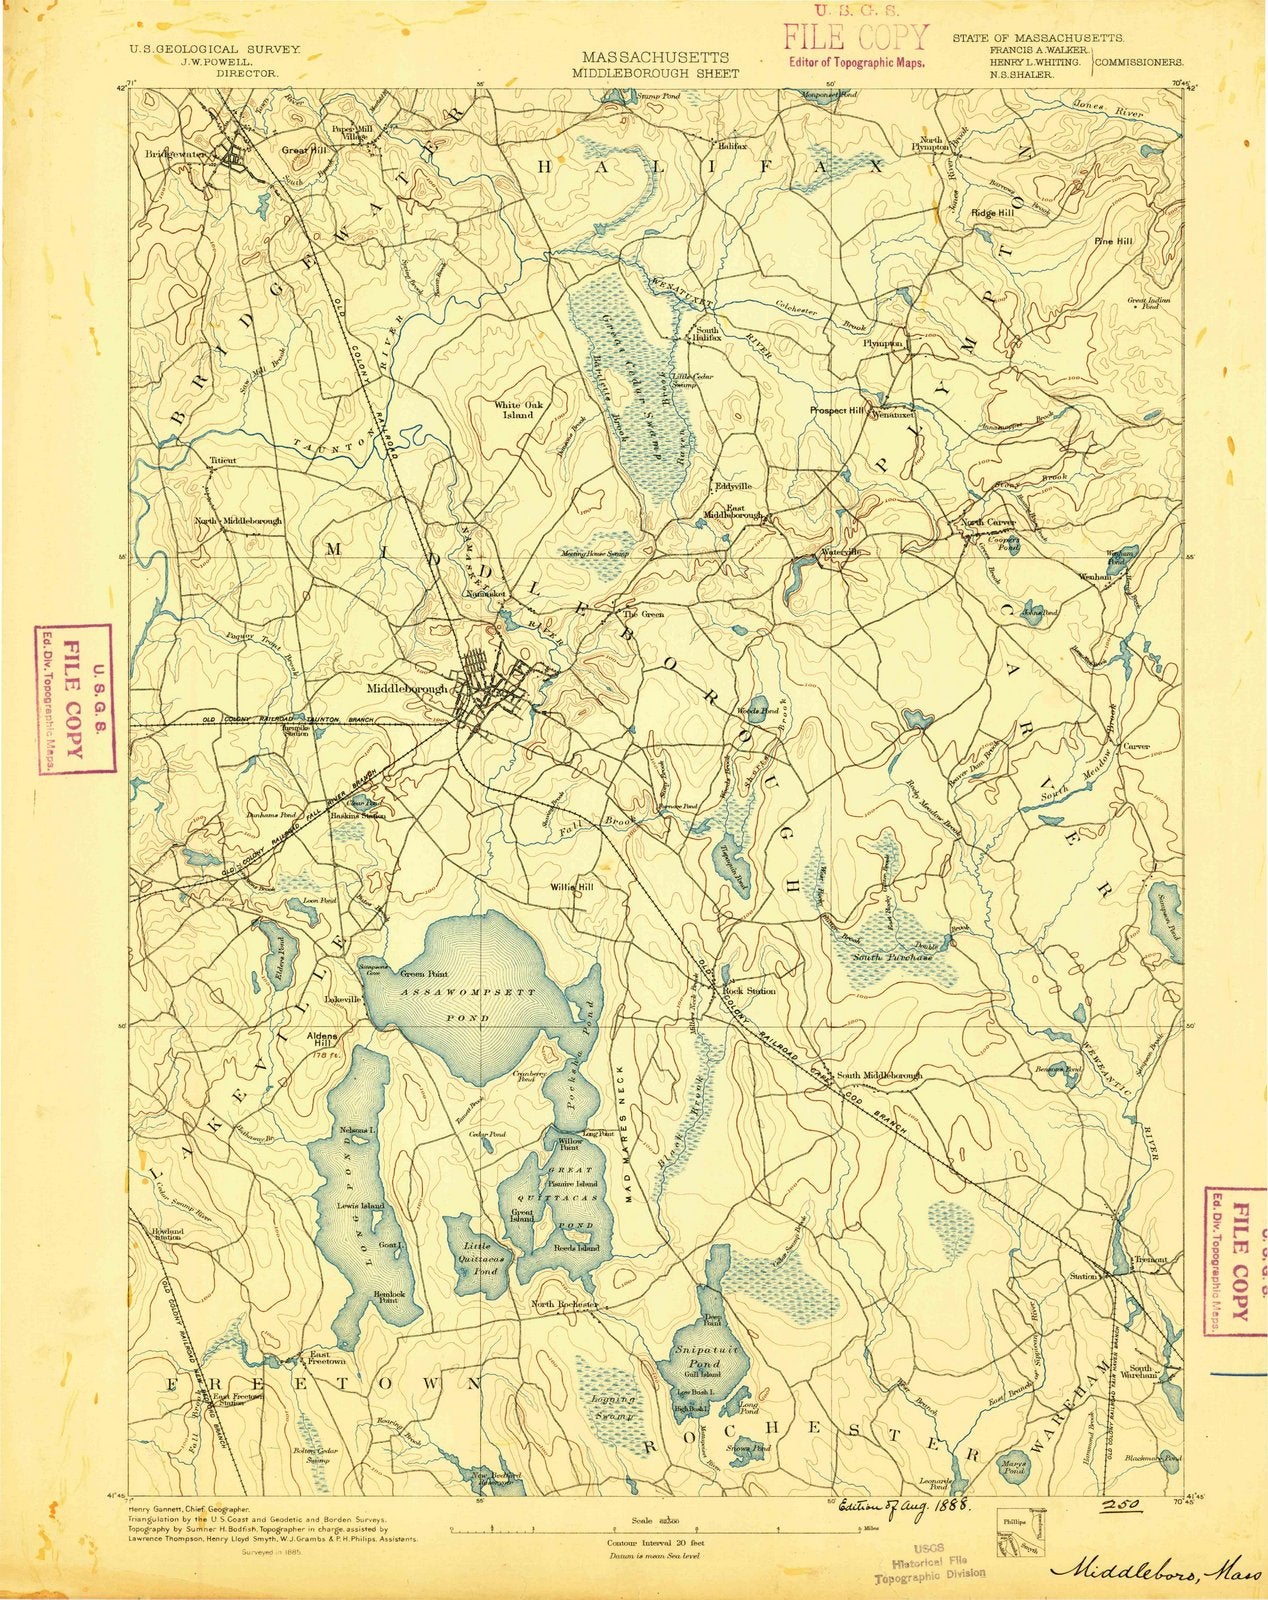 1888 Middleborough, MA - Massachusetts - USGS Topographic Map